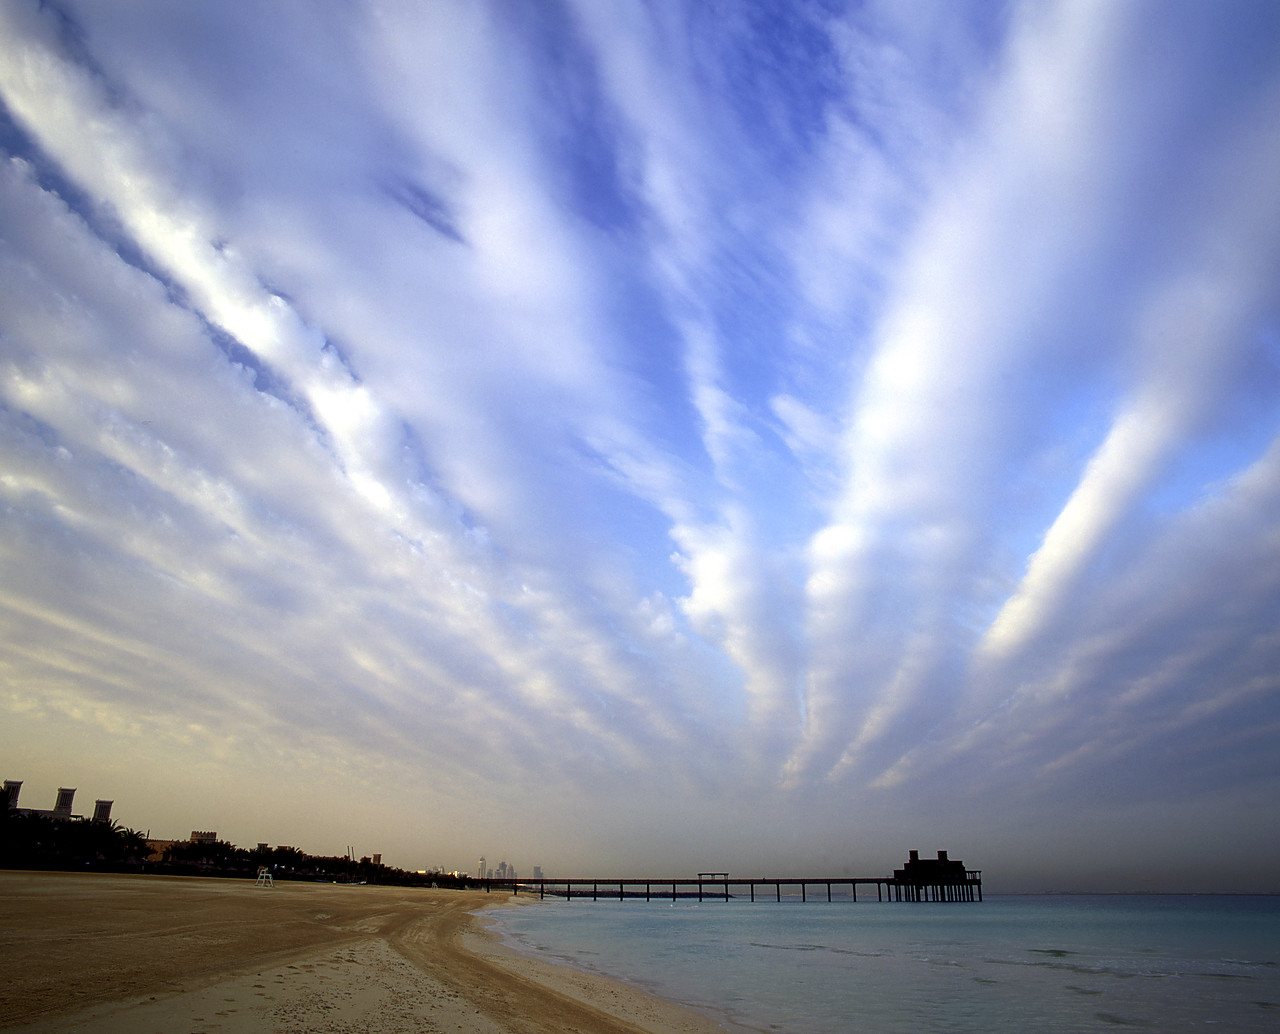 #050046-1 - Cloudscape over Pier, Jumerai Beach, Dubai, UAE